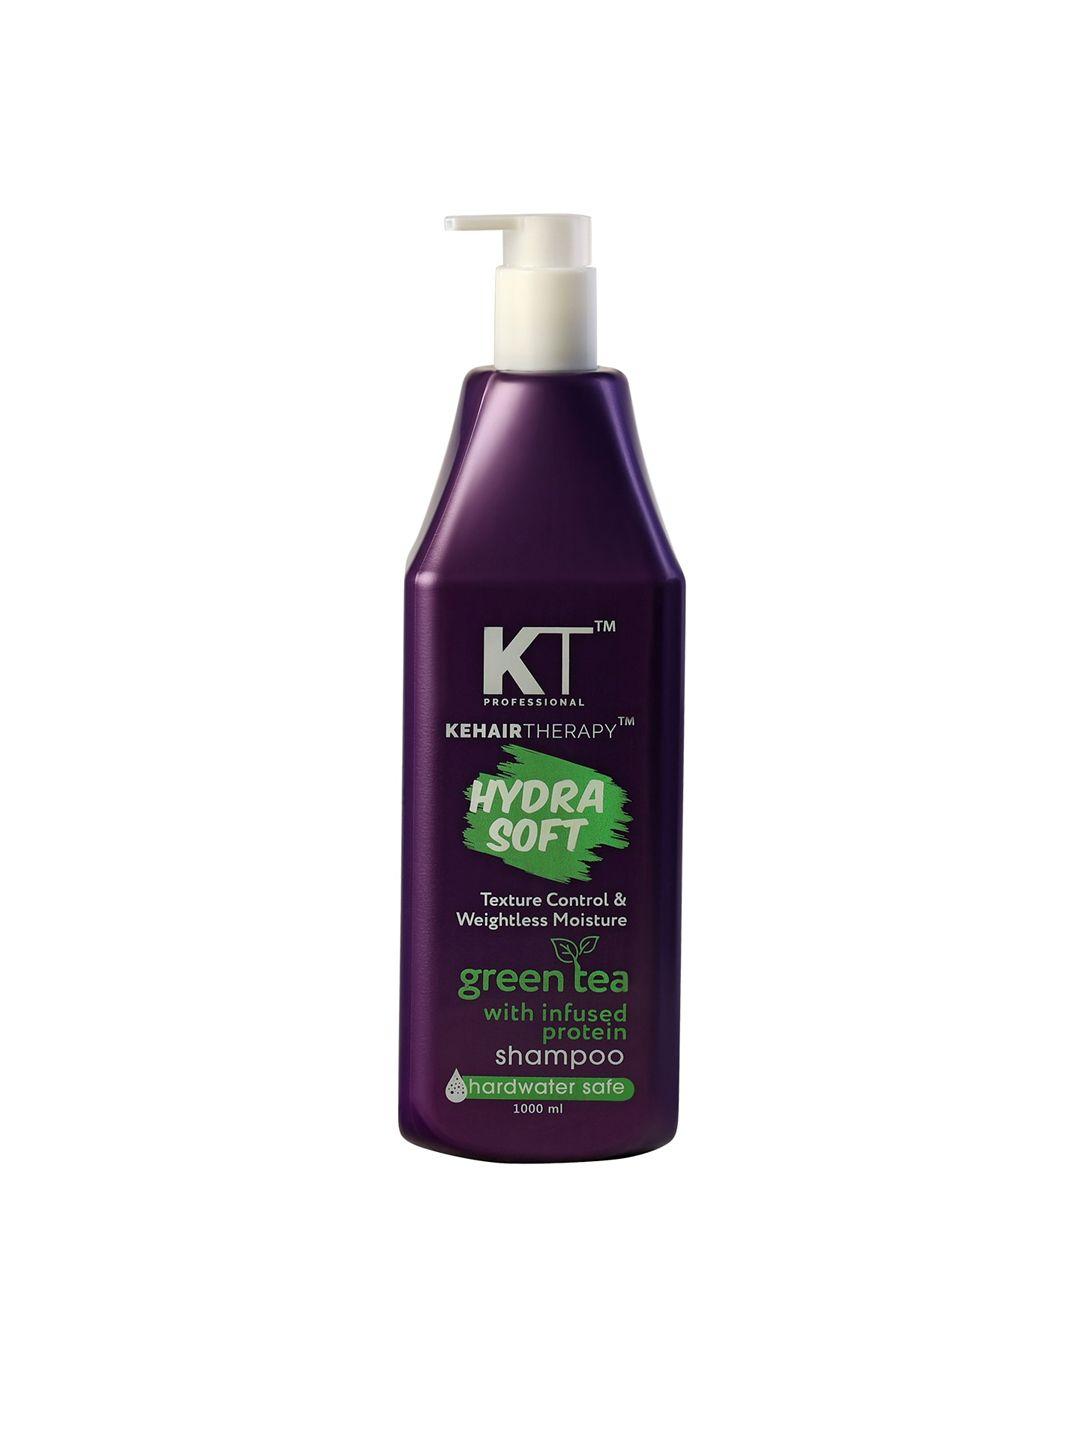 kehairtherapy professional hydra soft texture control keratin green tea shampoo - 1000 ml